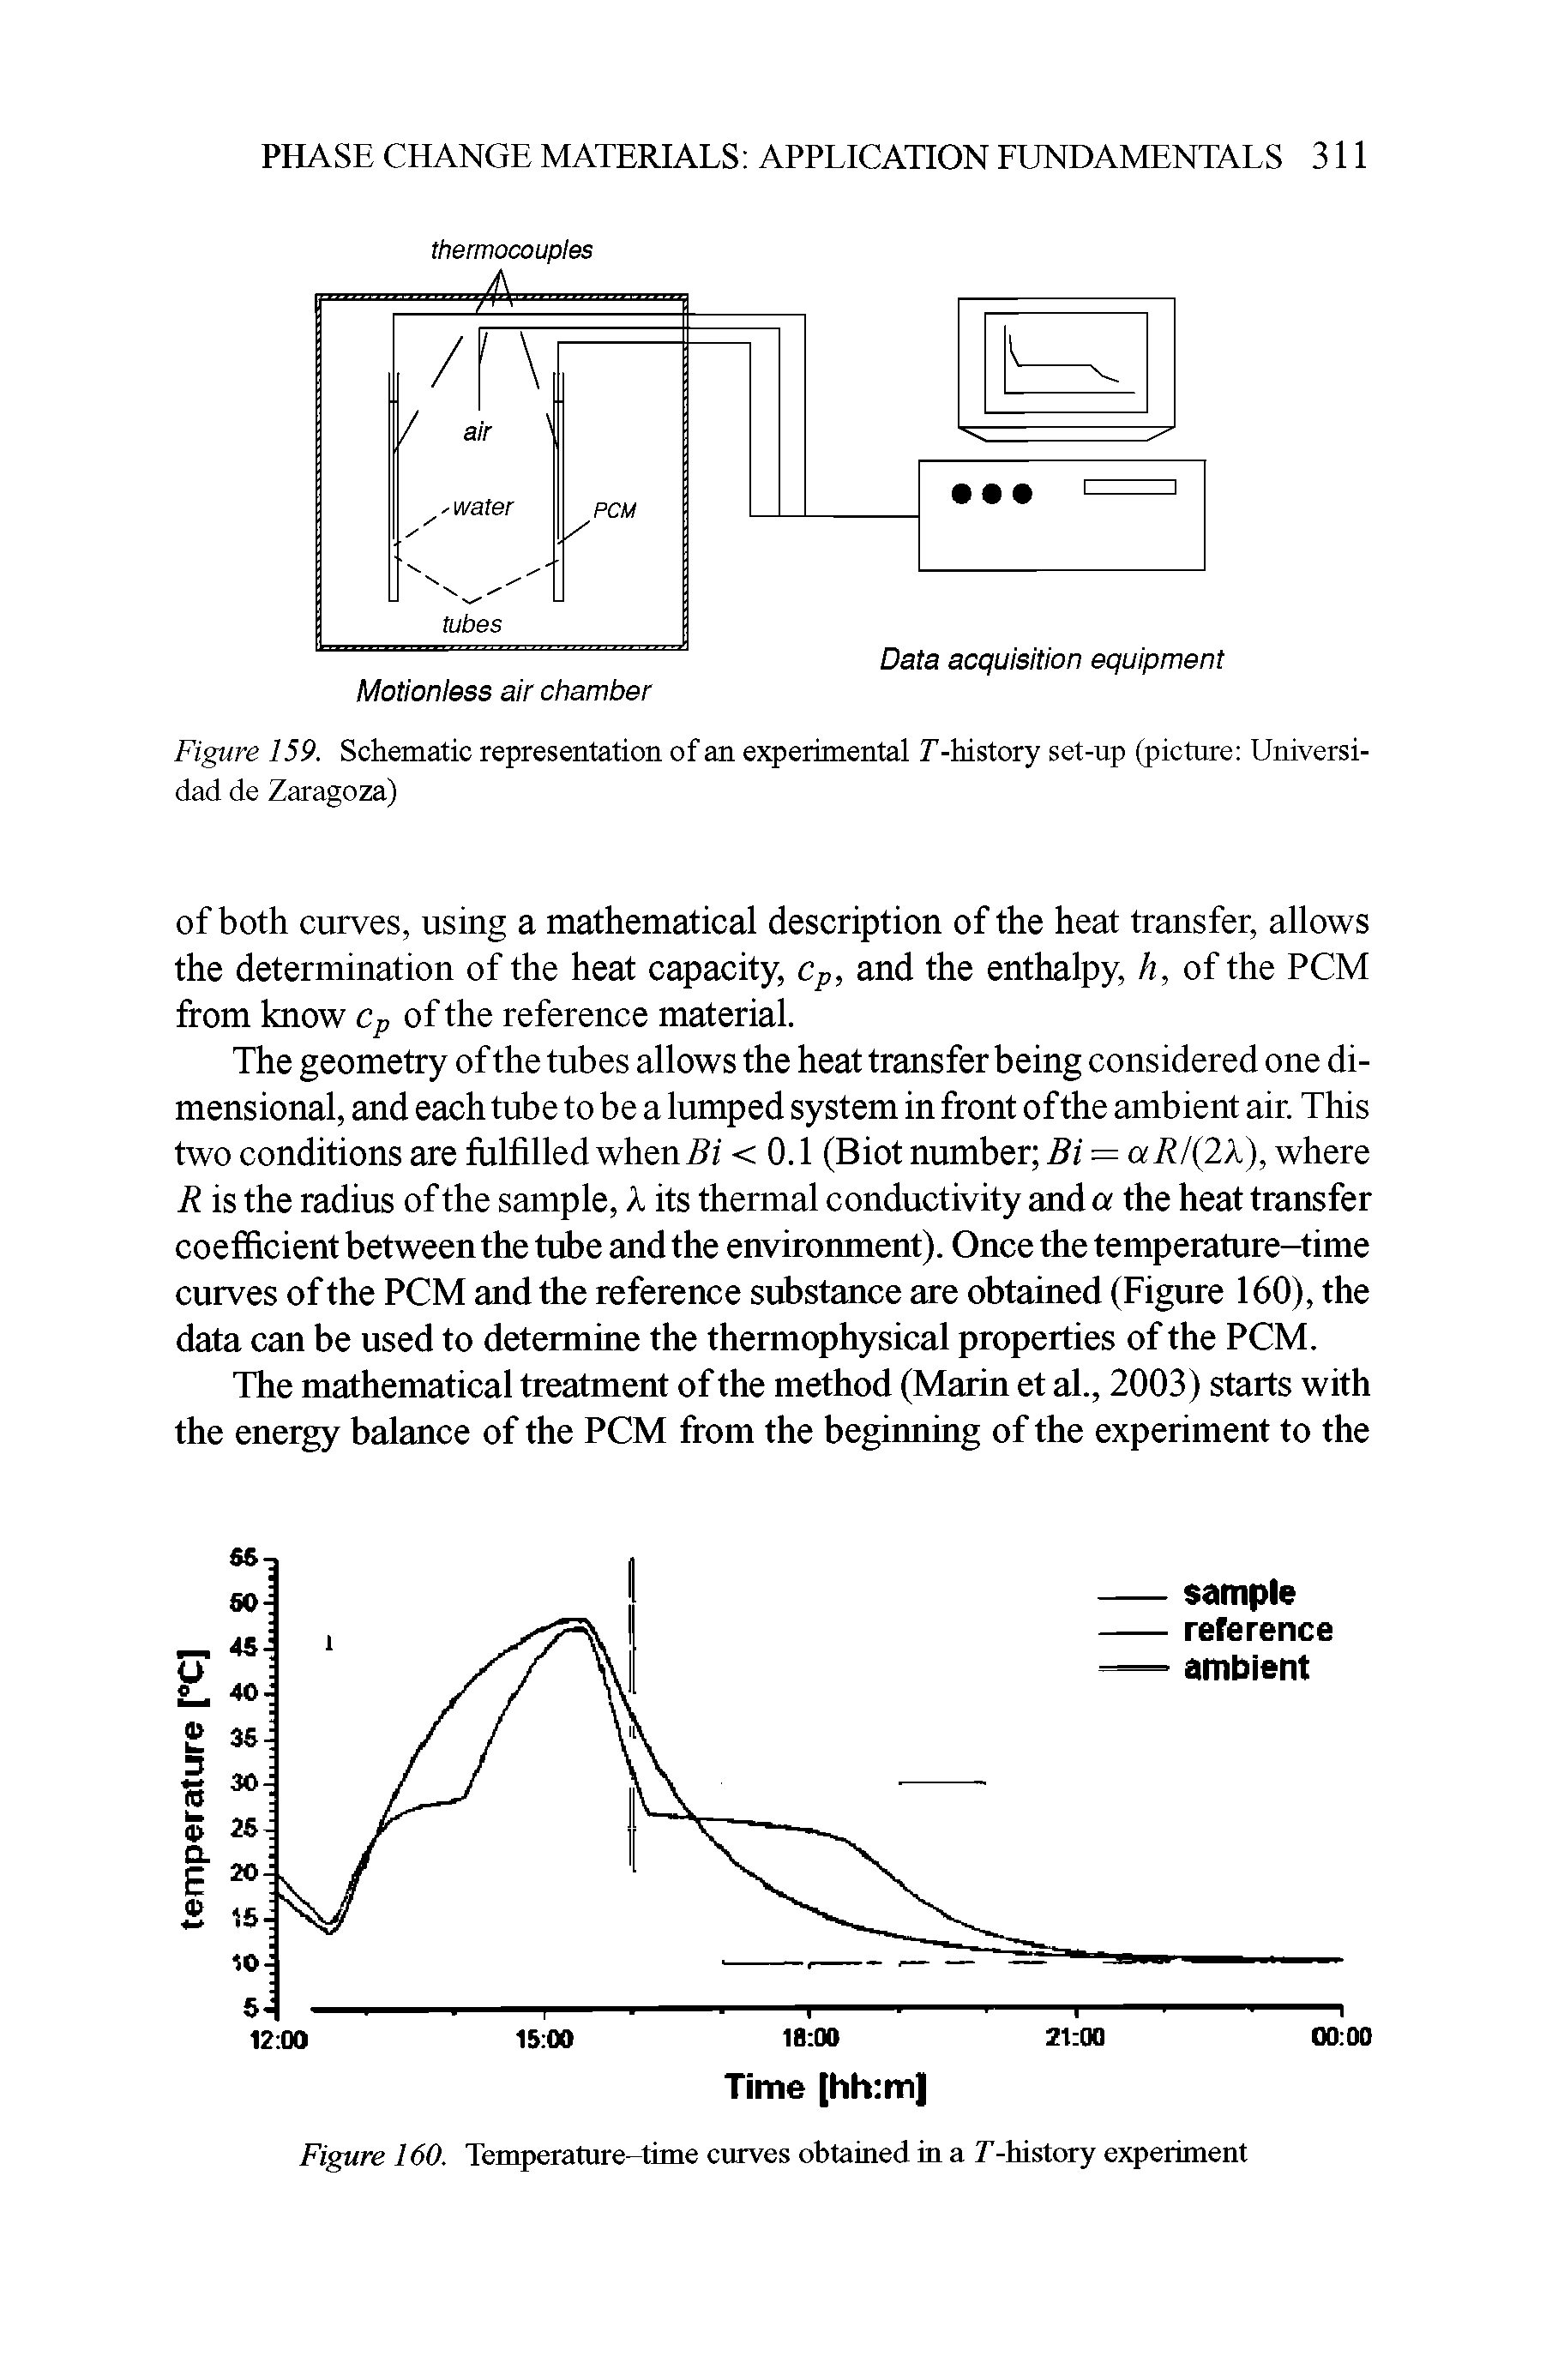 Figure 159. Schematic representation of an experimental T-history set-up (picture Universi-dad de Zaragoza)...